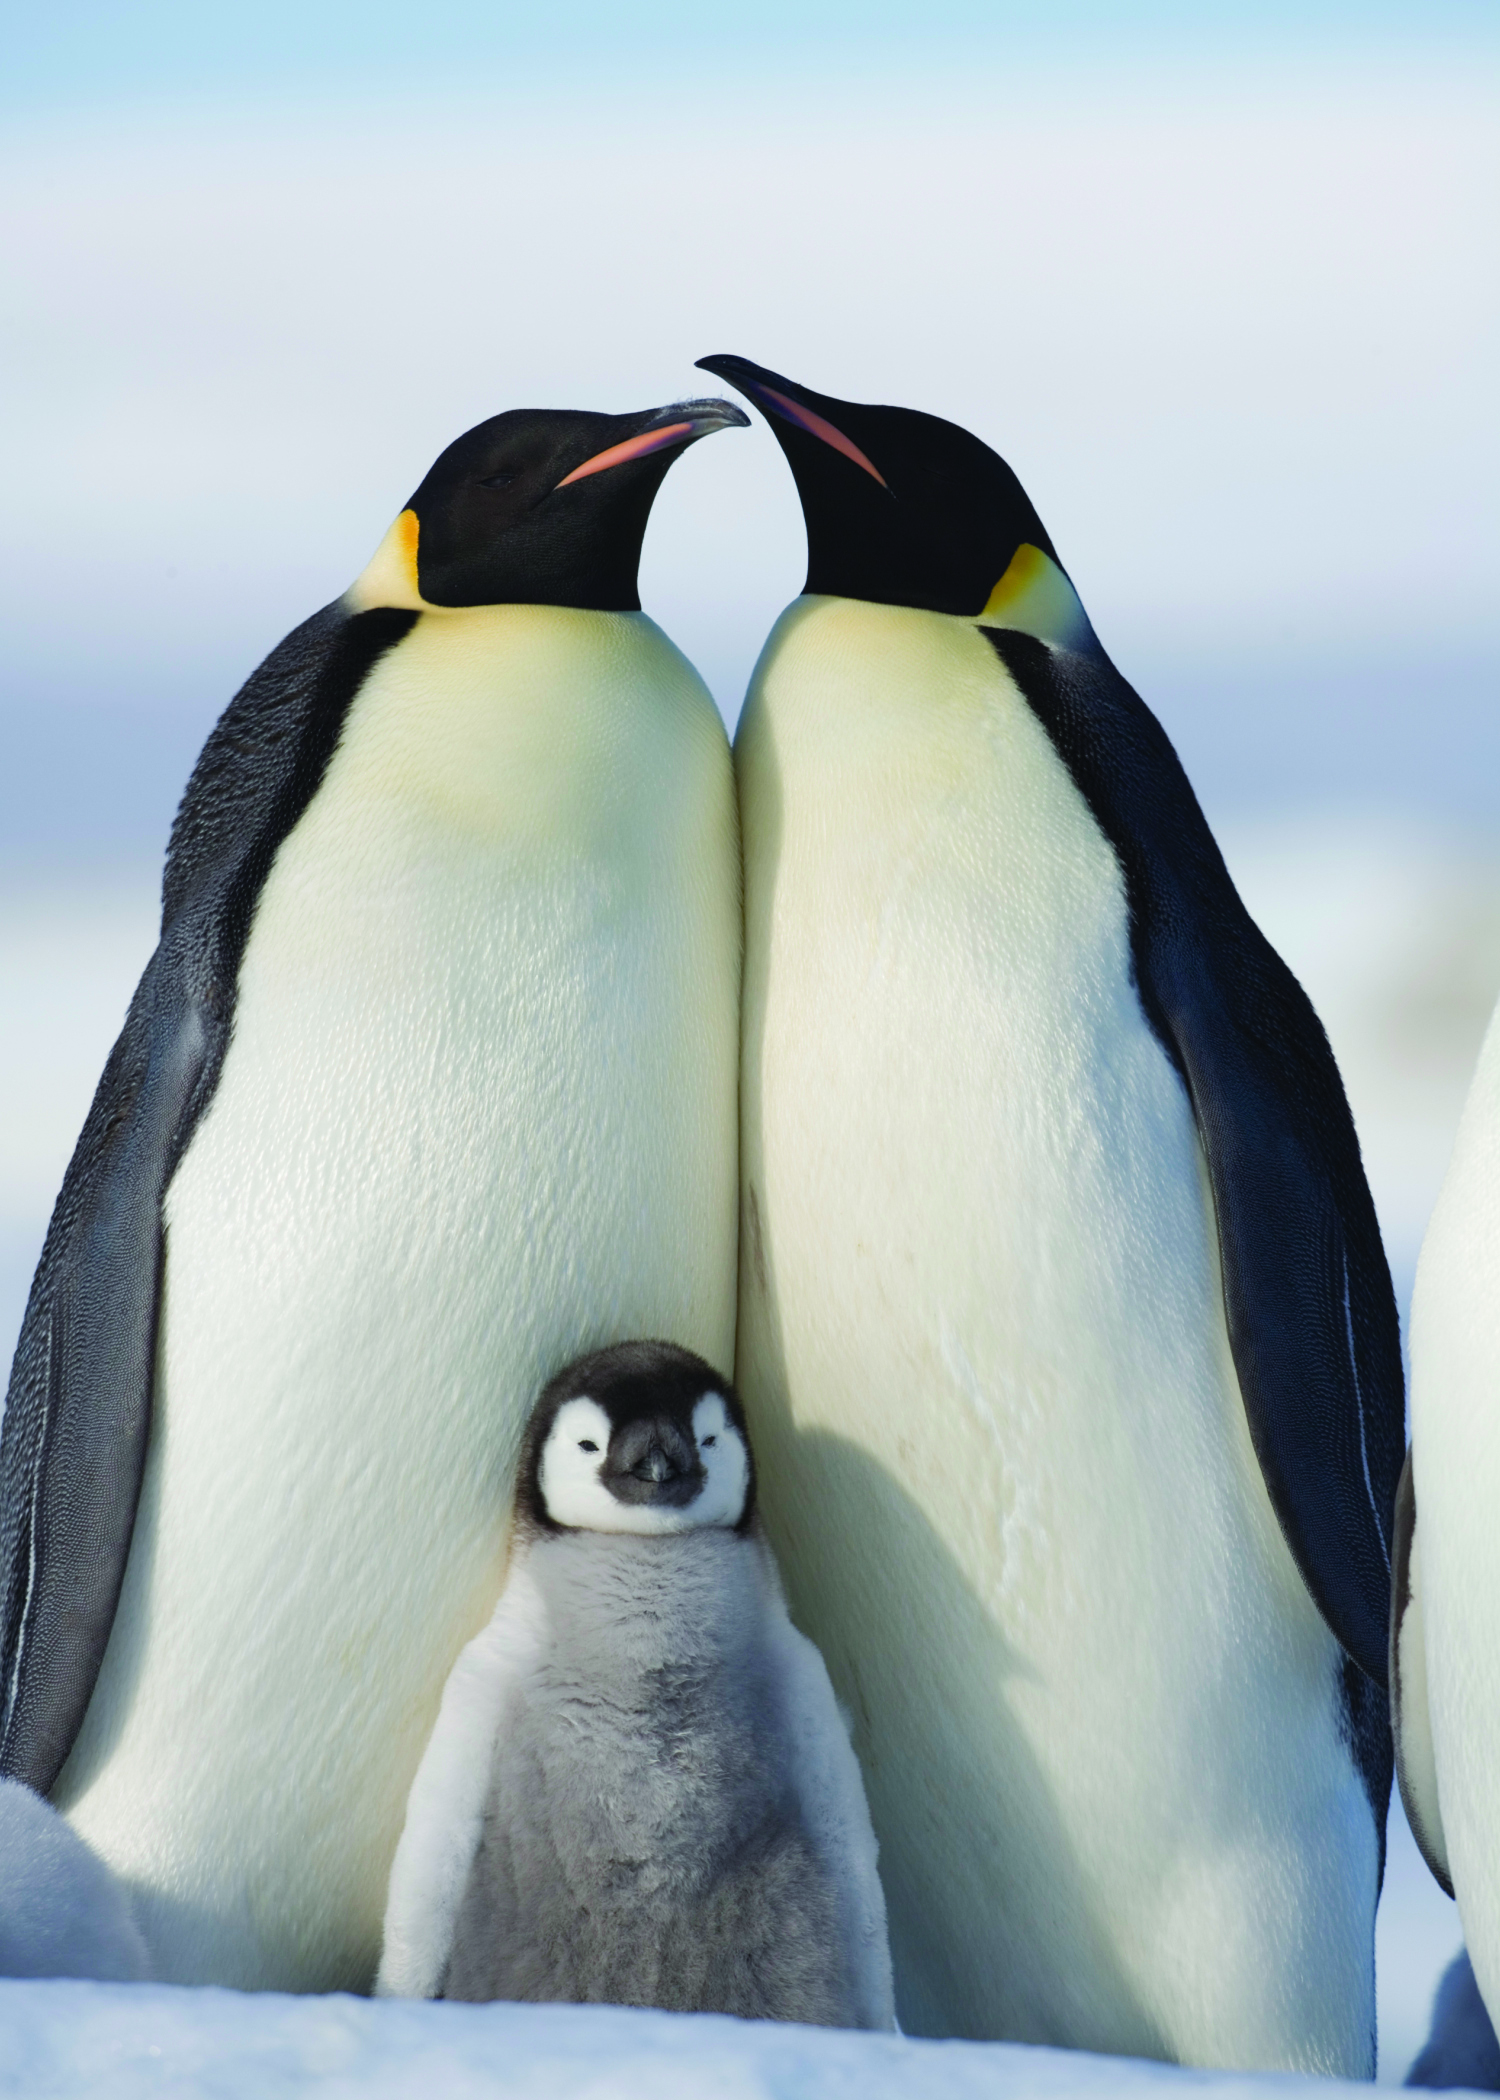 K Penguins   Lessons   Tes Teach